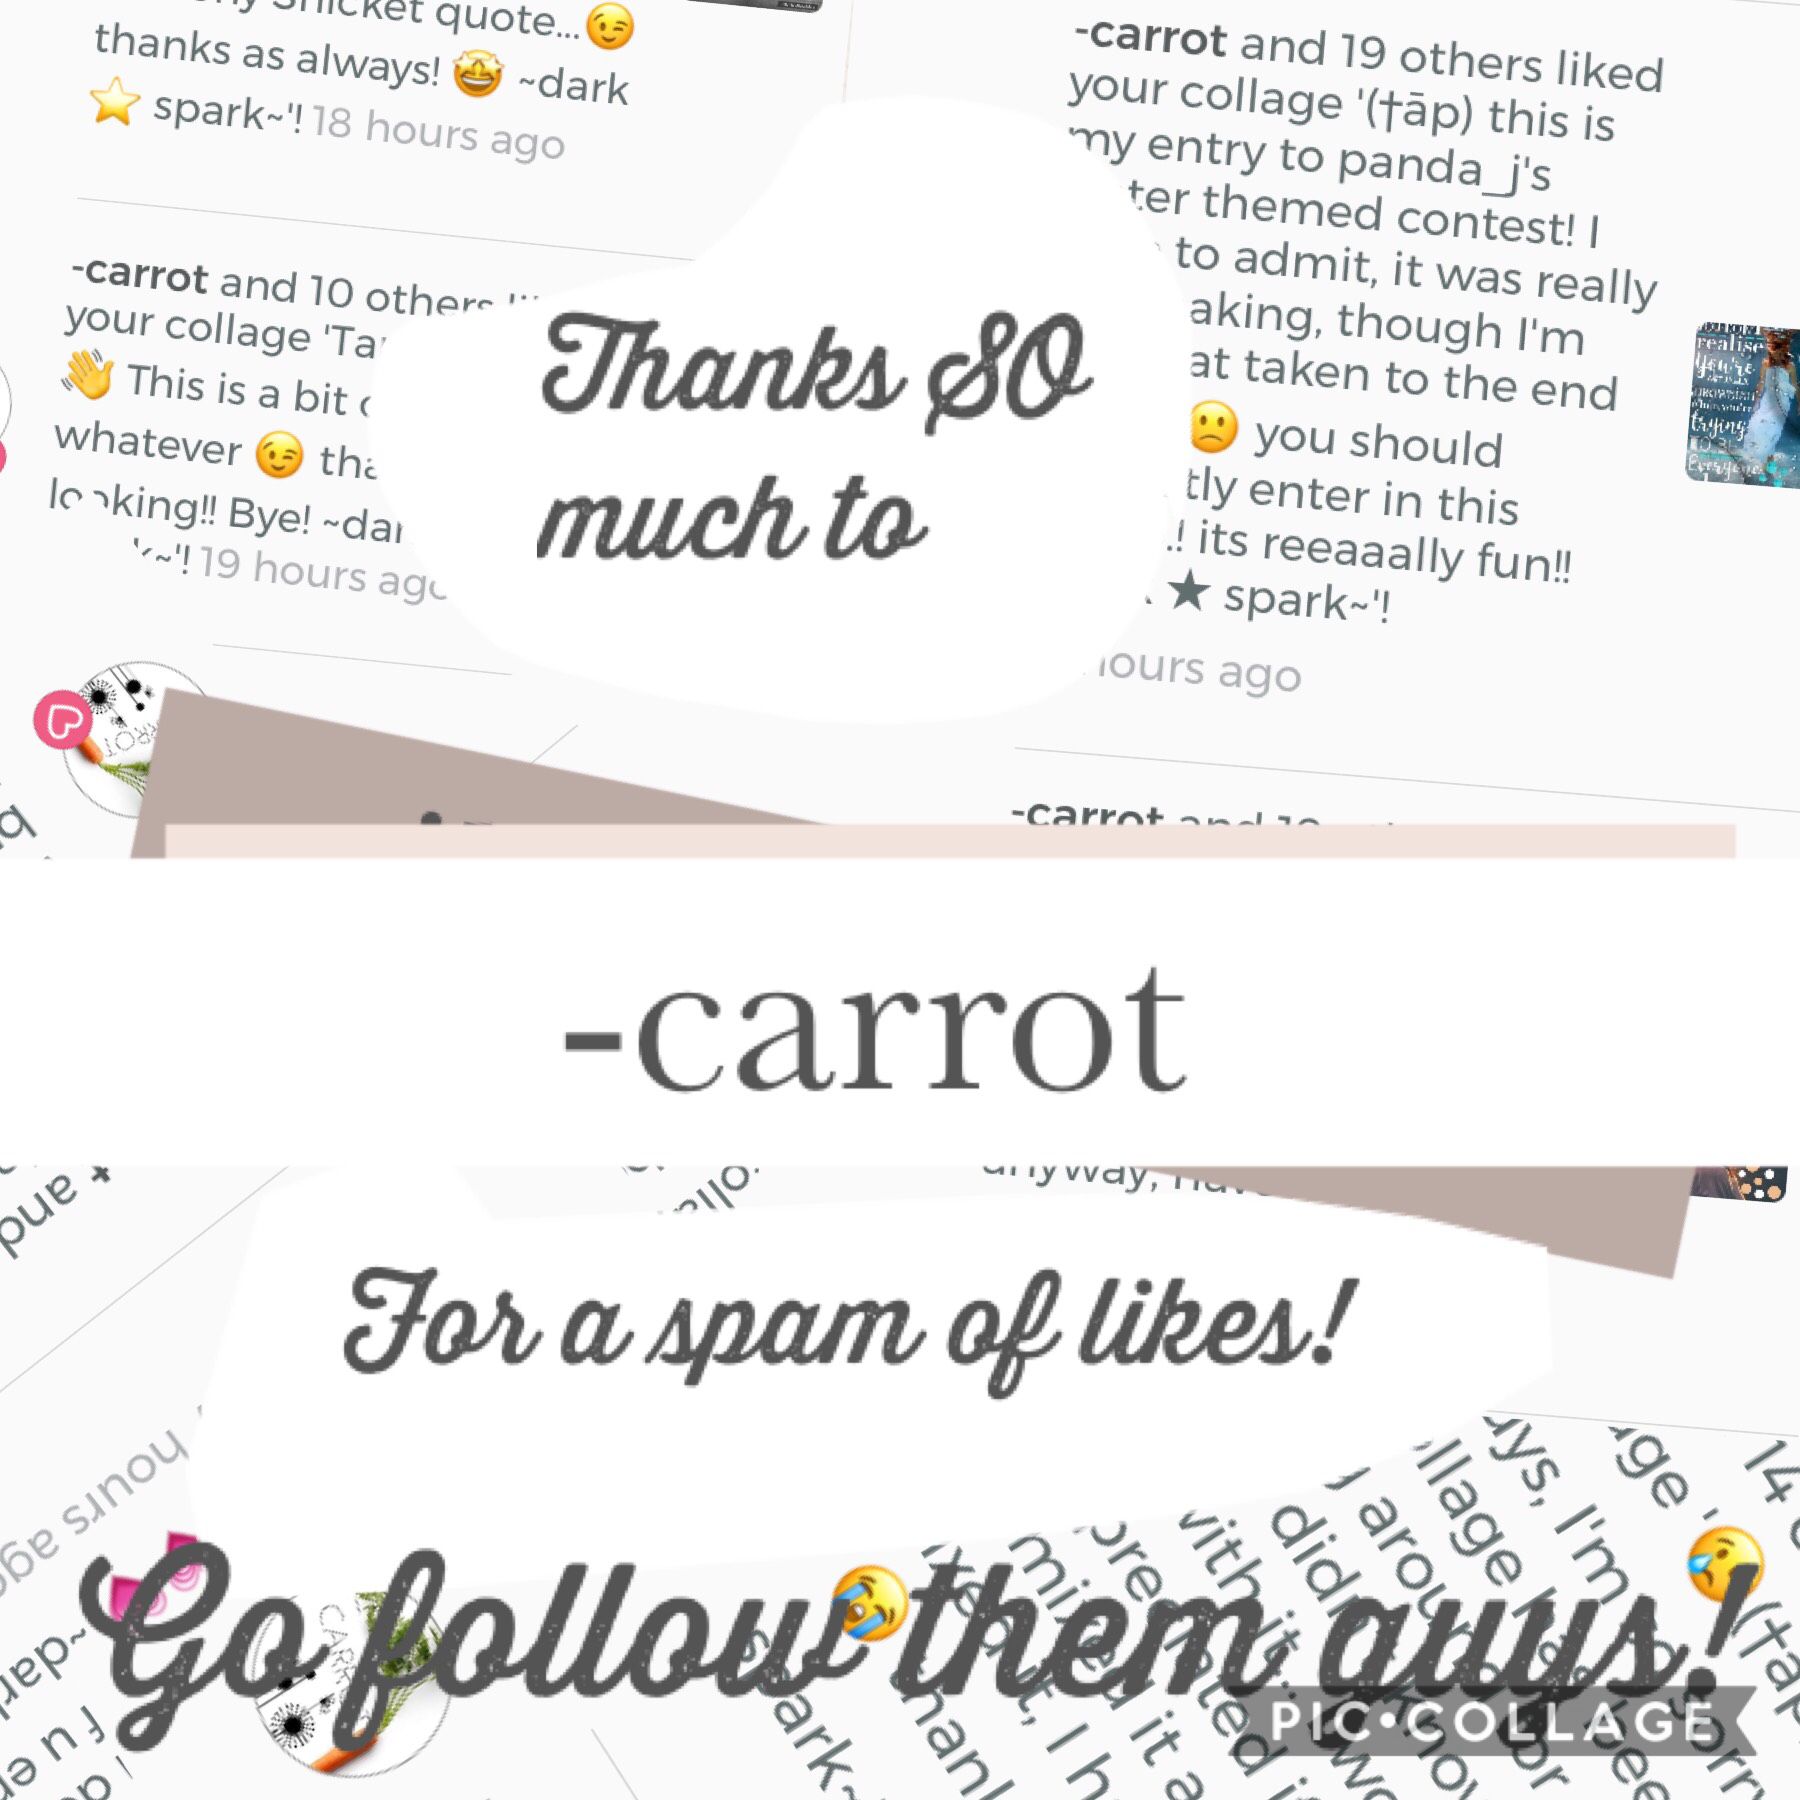 Tapp!
YUSSSS! Go carrot! thanks so much!!! Go follow them guysss!! 😛🐳🐝🦔